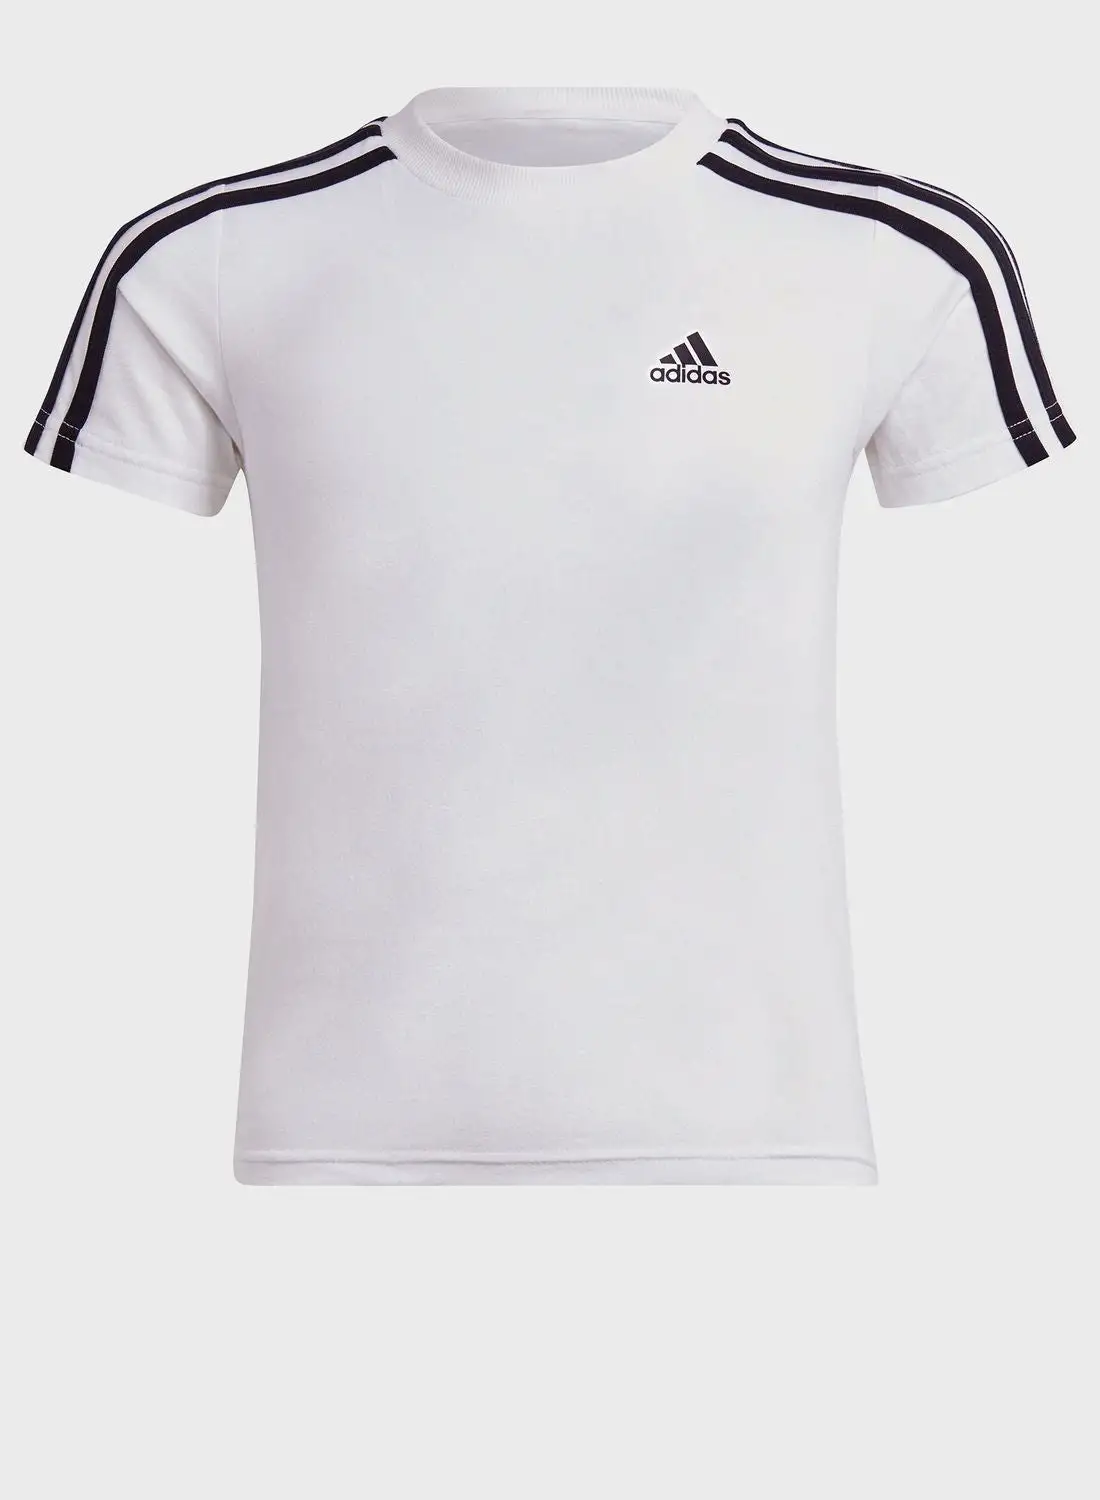 Adidas Little Kids 3 Stripes Cotton T-Shirt